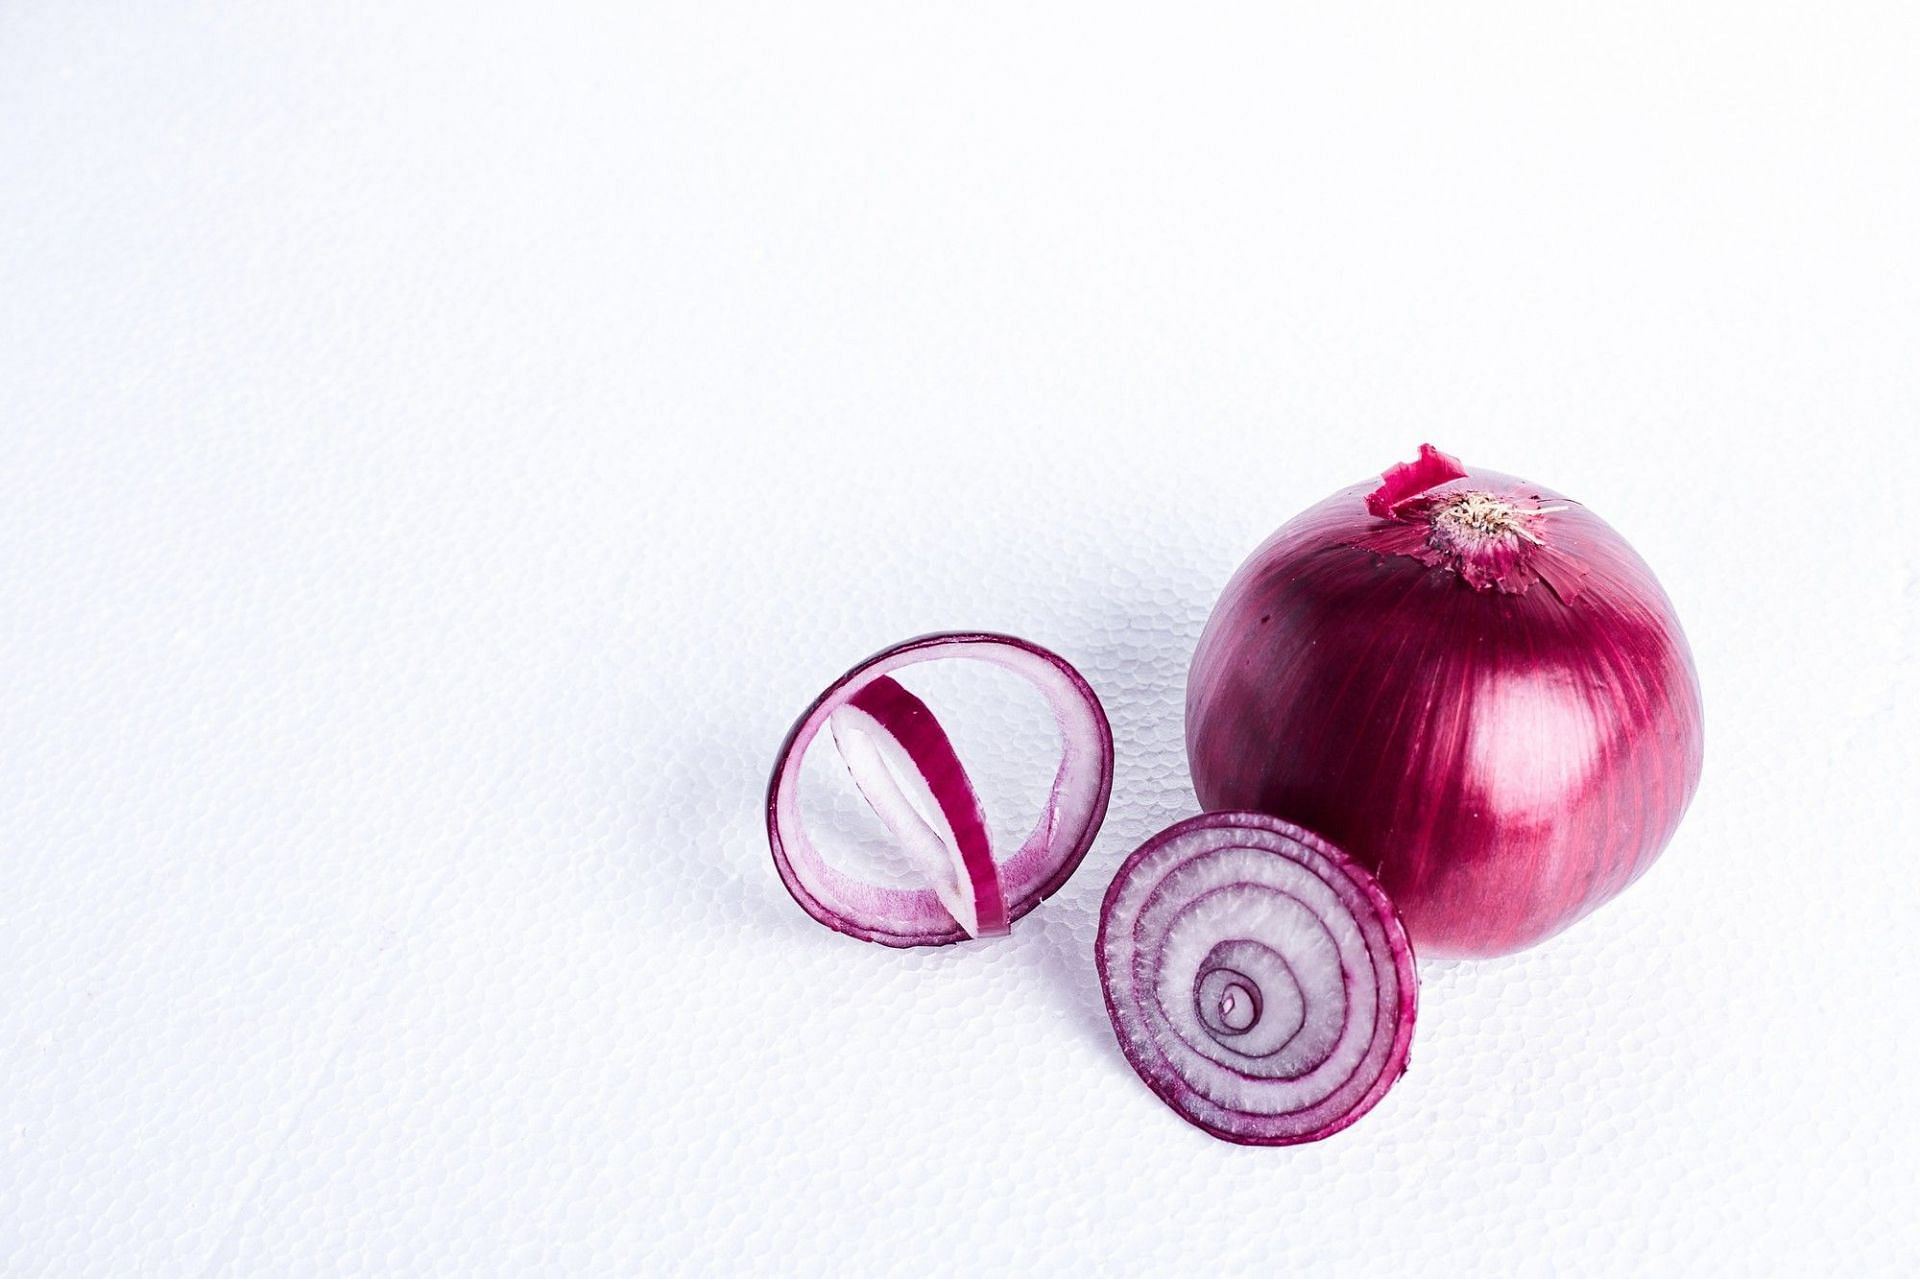 Onion juice can ease symptoms of sunstroke. (Photo via Freepik/azerbaijan_stockers)